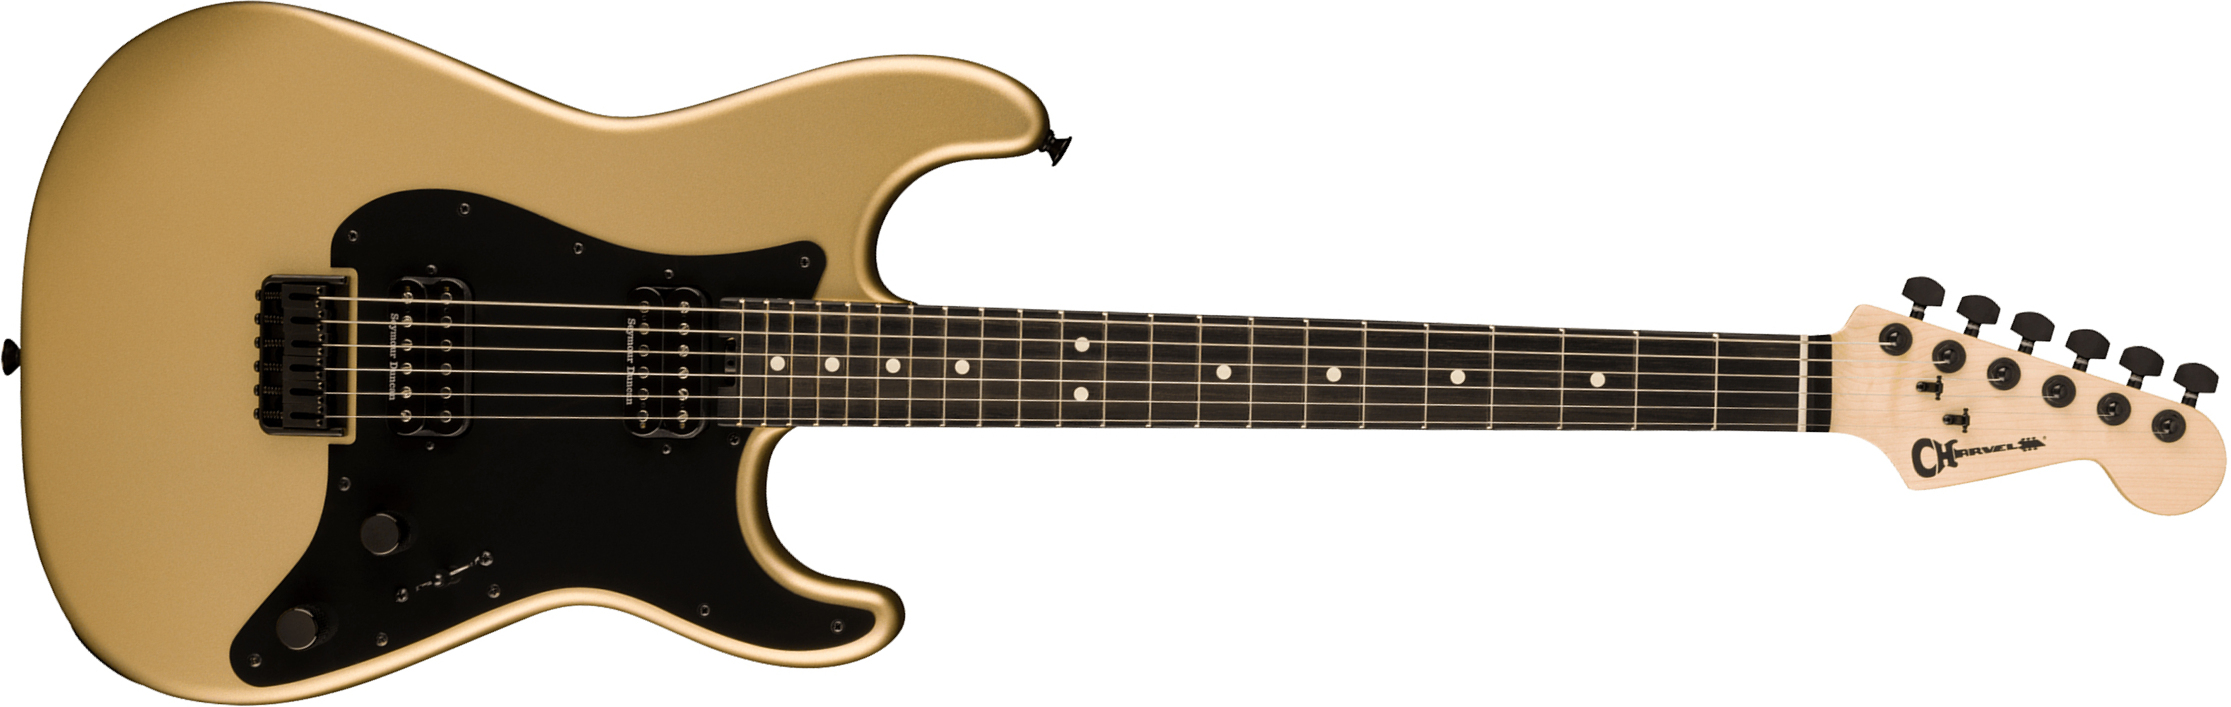 Charvel So-cal Style 1 Hh Ht E Pro-mod 2h Seymour Duncan Eb - Pharaohs Gold - Str shape electric guitar - Main picture